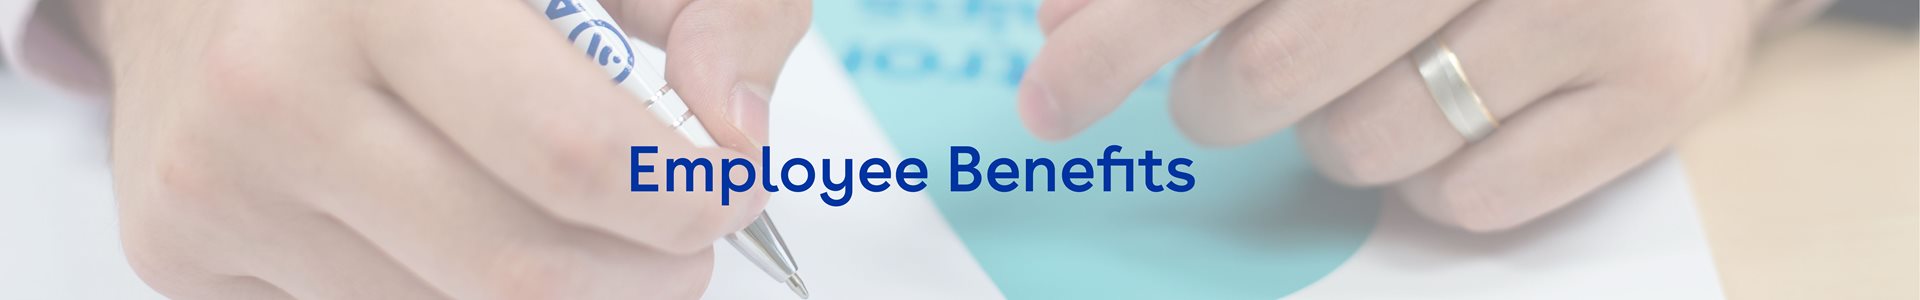 big-benefits-banner.jpg